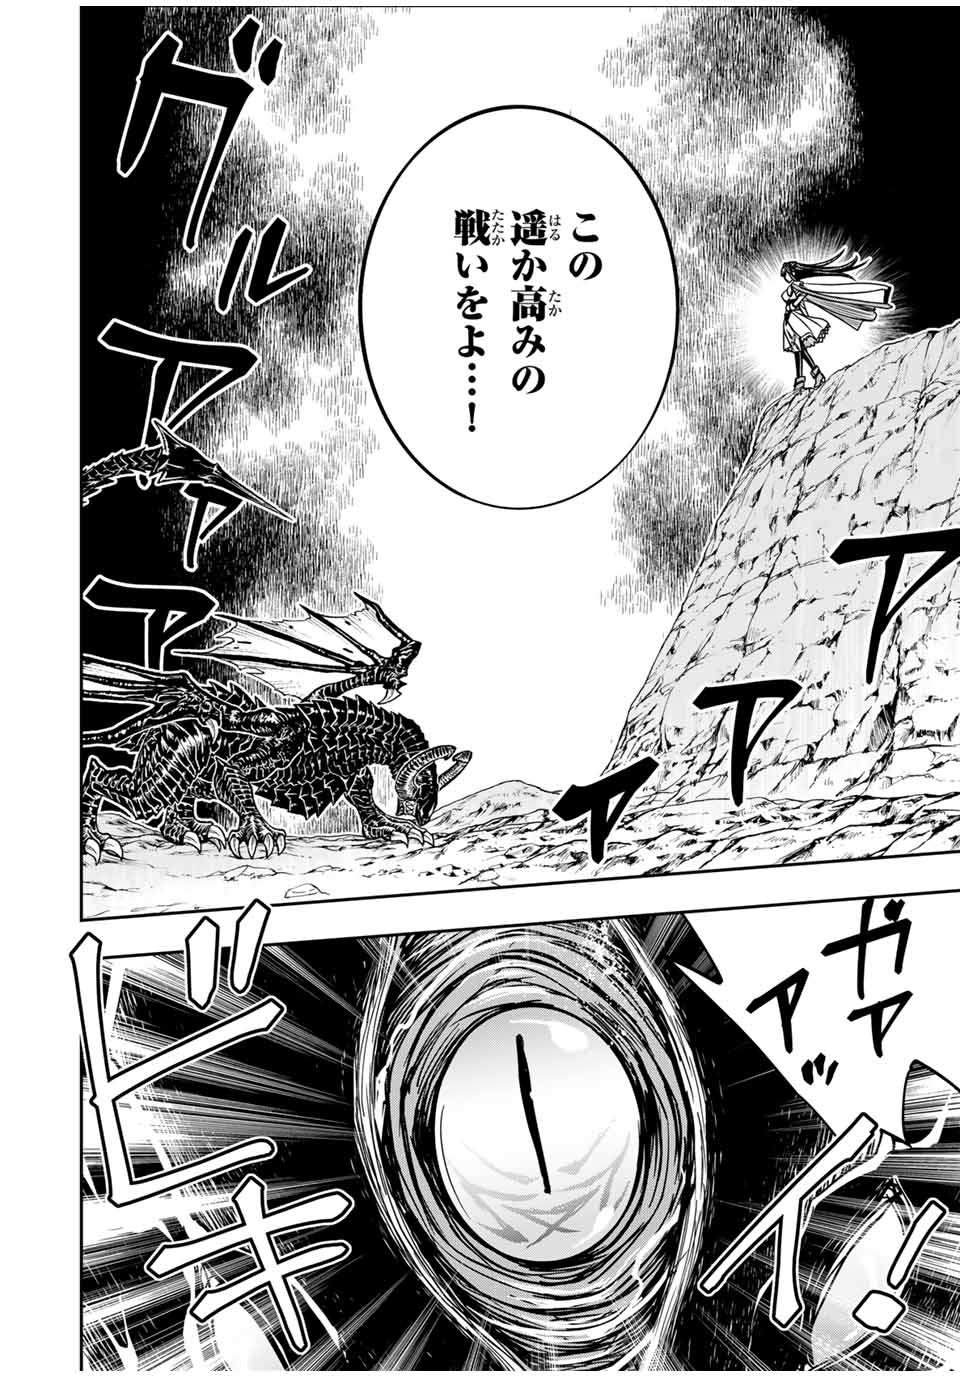 Nengan no Akuyaku Reijou (Last Boss) no Karada wo Teniiretazo!  - Chapter 22 - Page 4